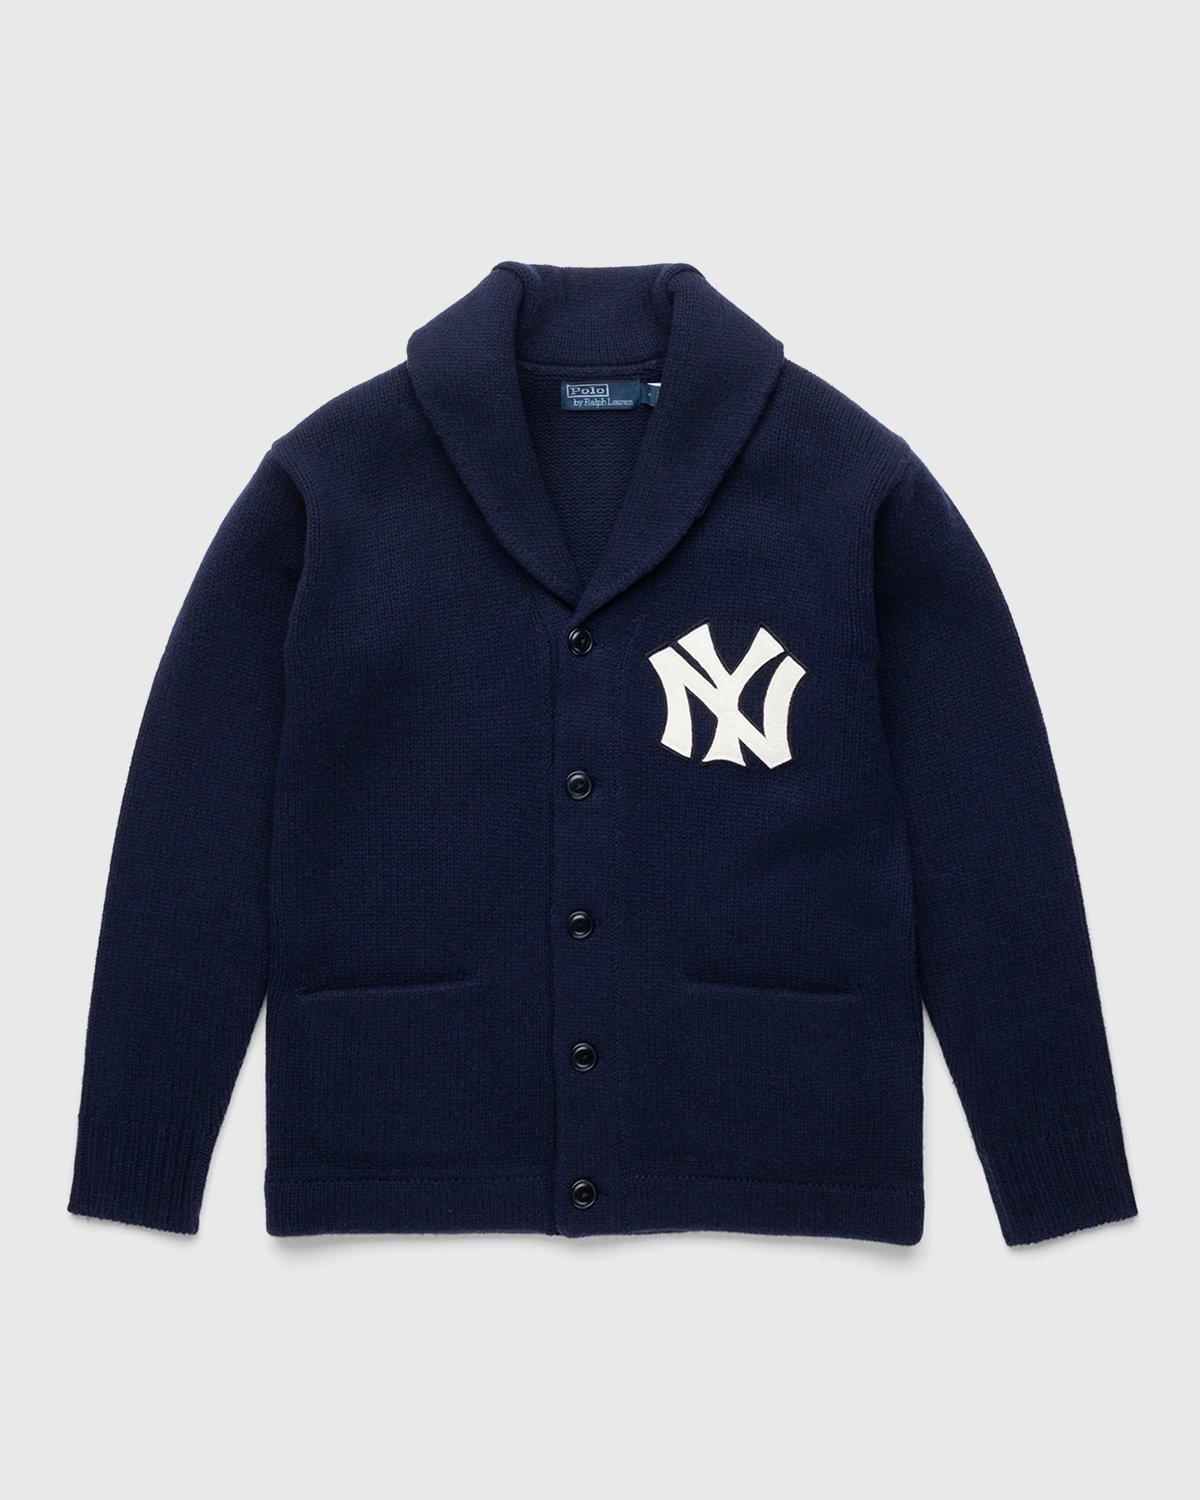 Ralph Lauren – Yankees Cardigan Navy - Knitwear - Blue - Image 1